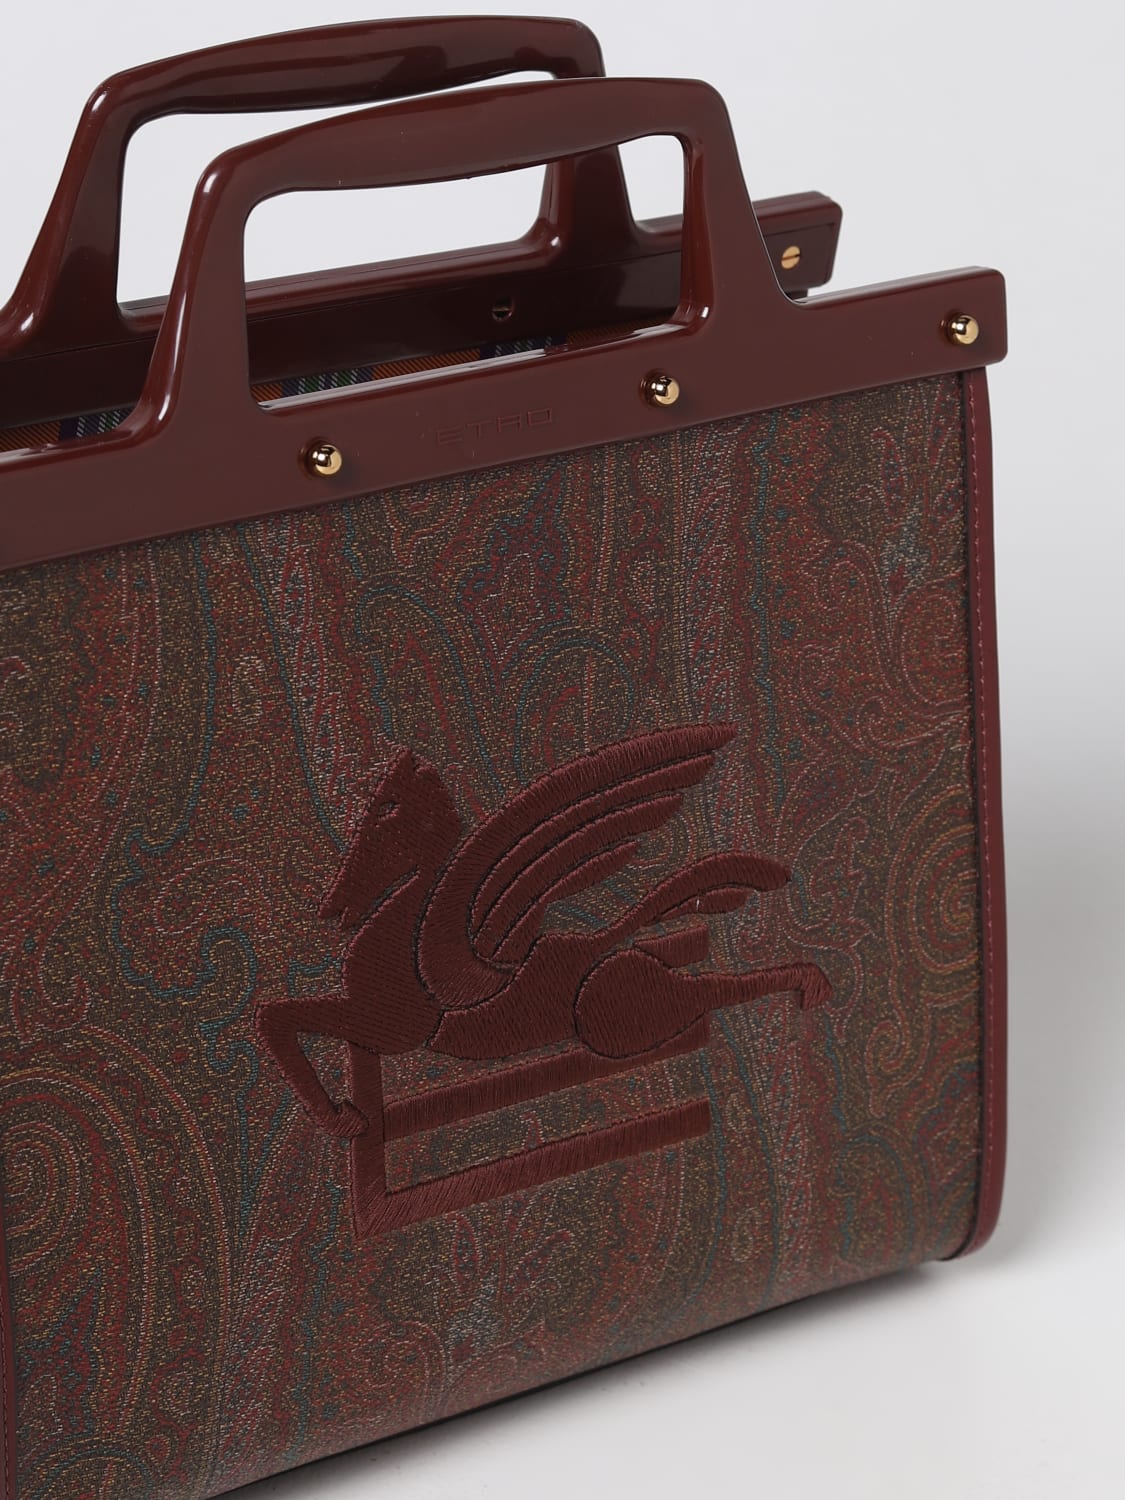 ETRO: Love Trotter bag in coated cotton - Brown | Etro handbag ...